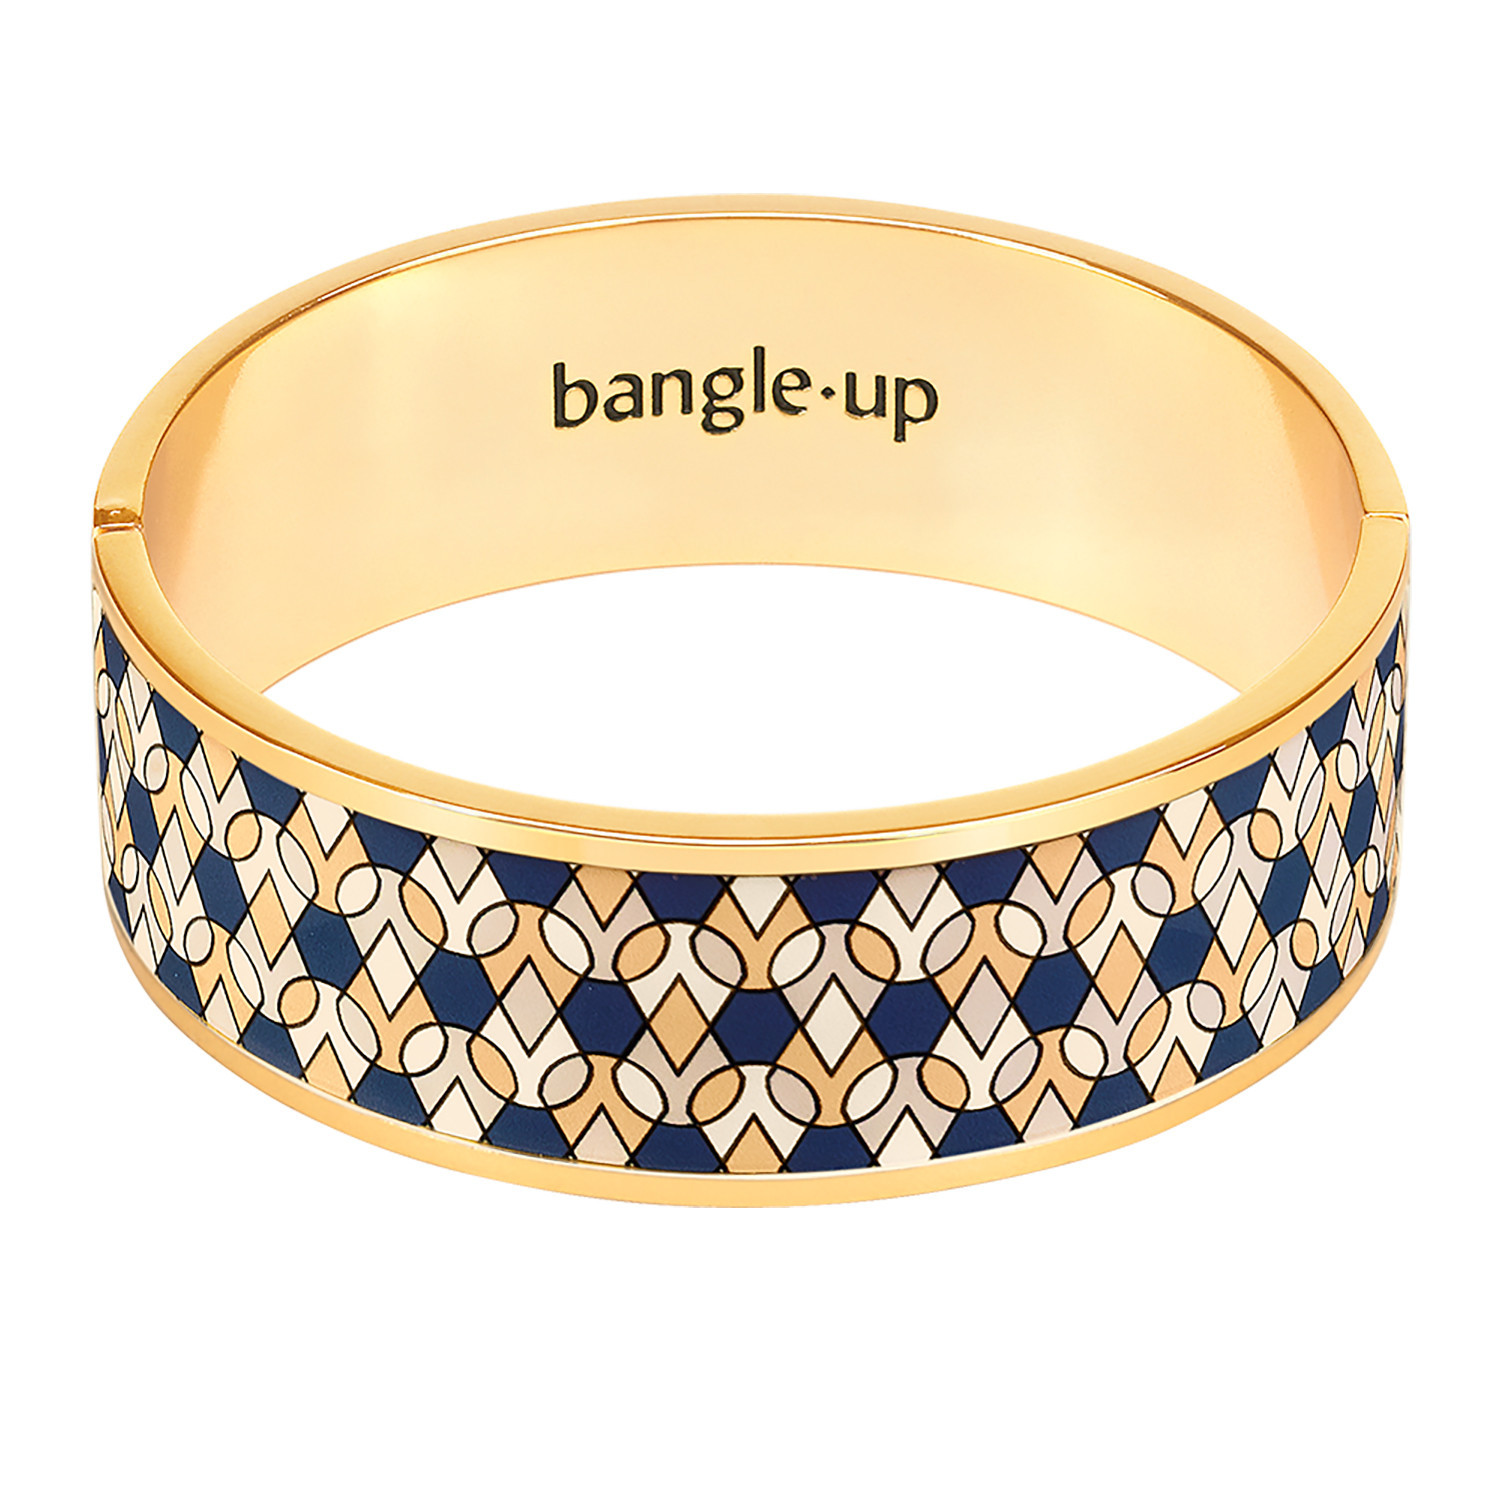 Bracelet jonc Bangle up Pinuply bleu nuit
Taille 1